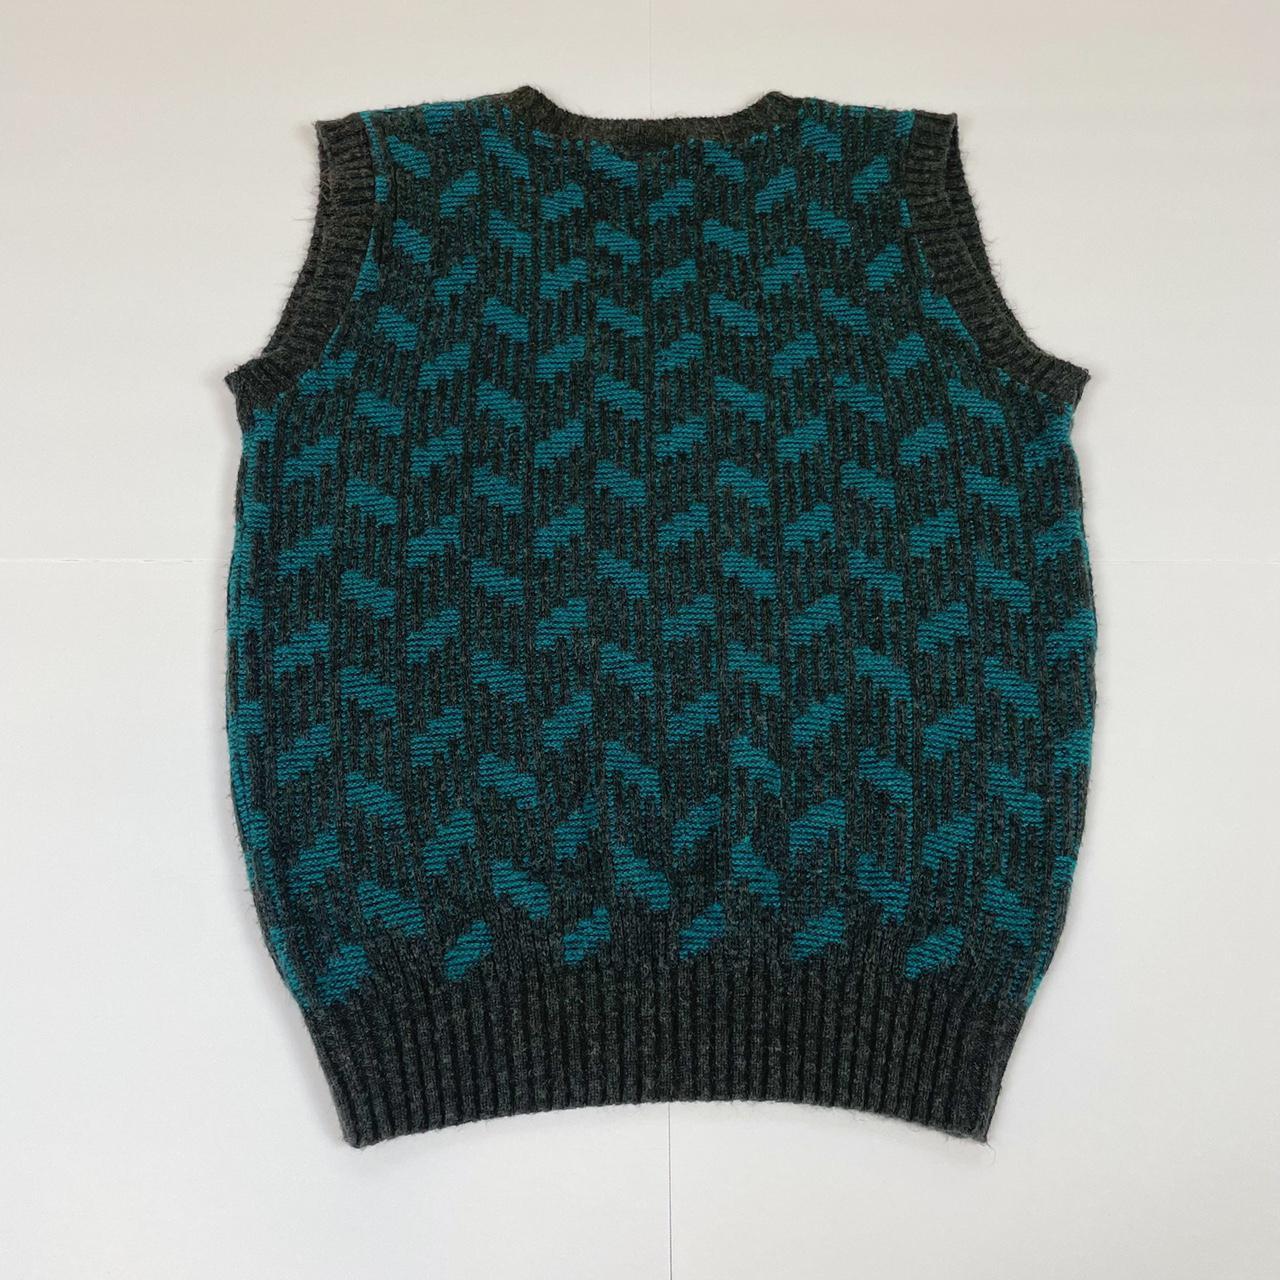 Product Image 3 - Manhattan Grey/Teal Sweater Vest
Sleeveless sweater